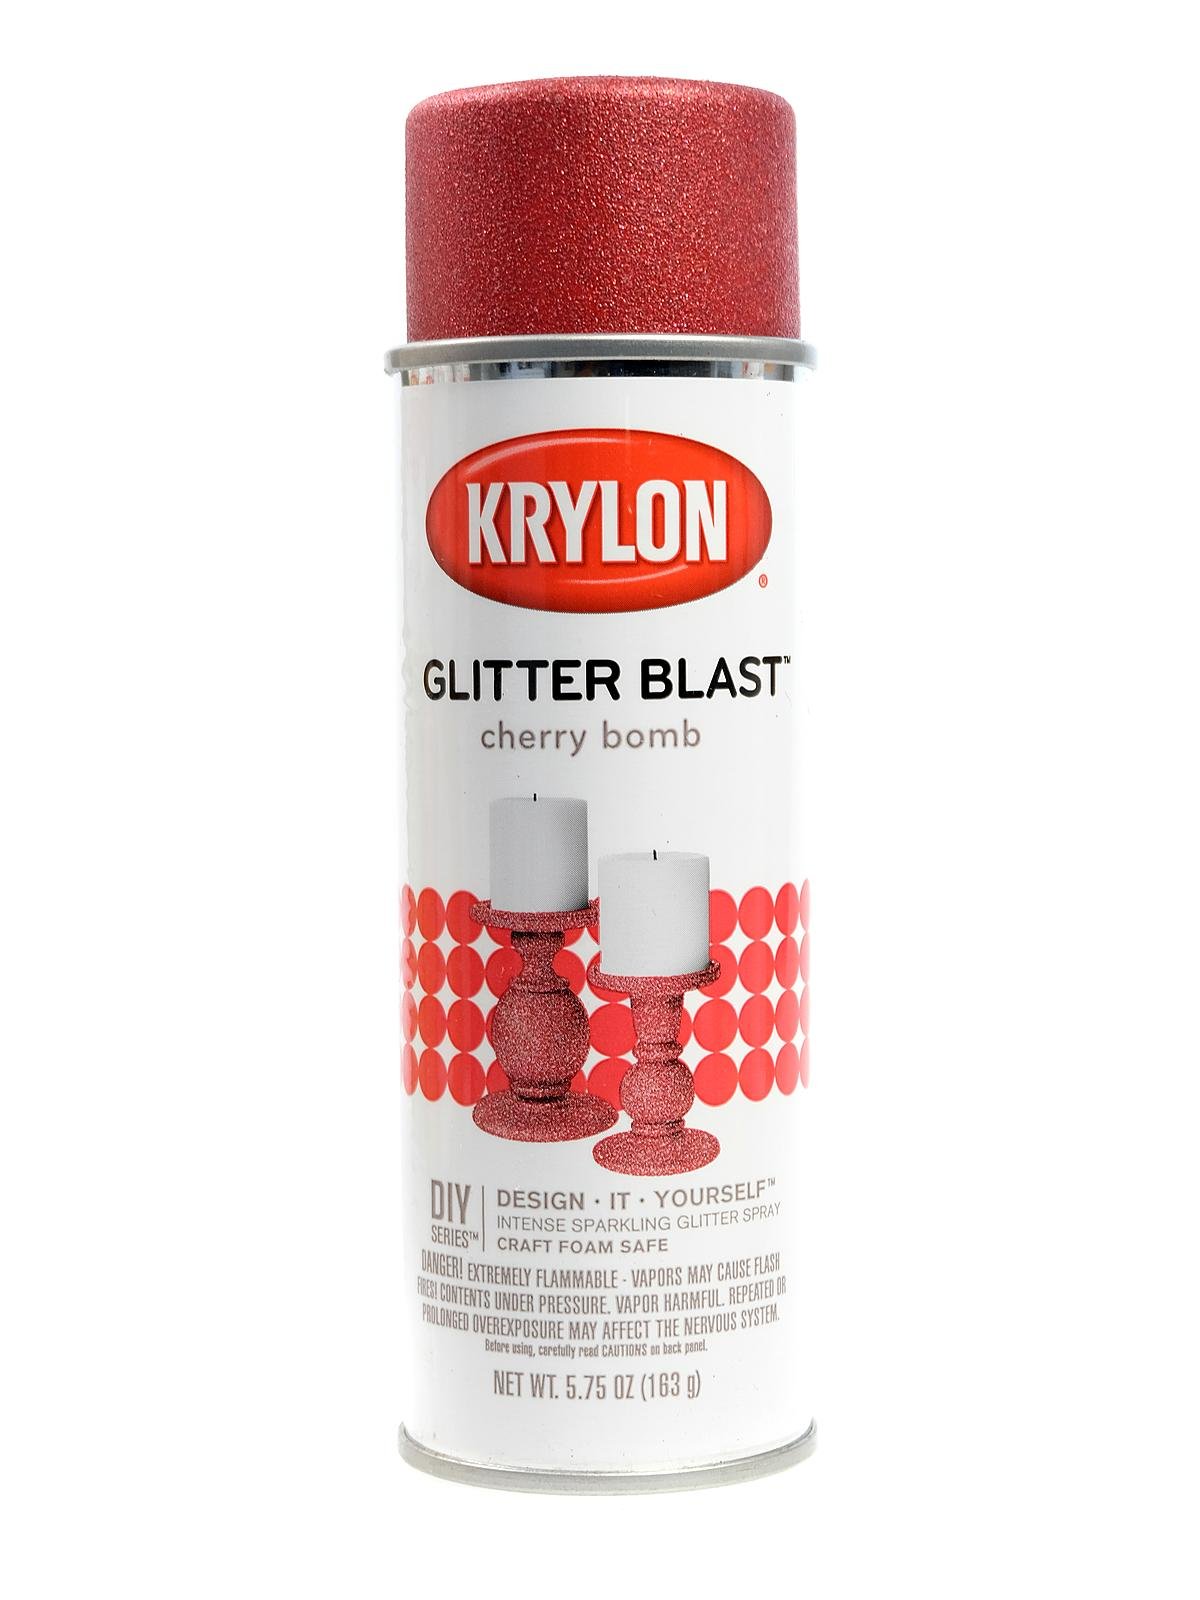  Krylon K03806A00 Glitter Blast Glitter Spray Paint for Craft  Projects, Cherry Bomb Red, 5.75 oz : Arts, Crafts & Sewing